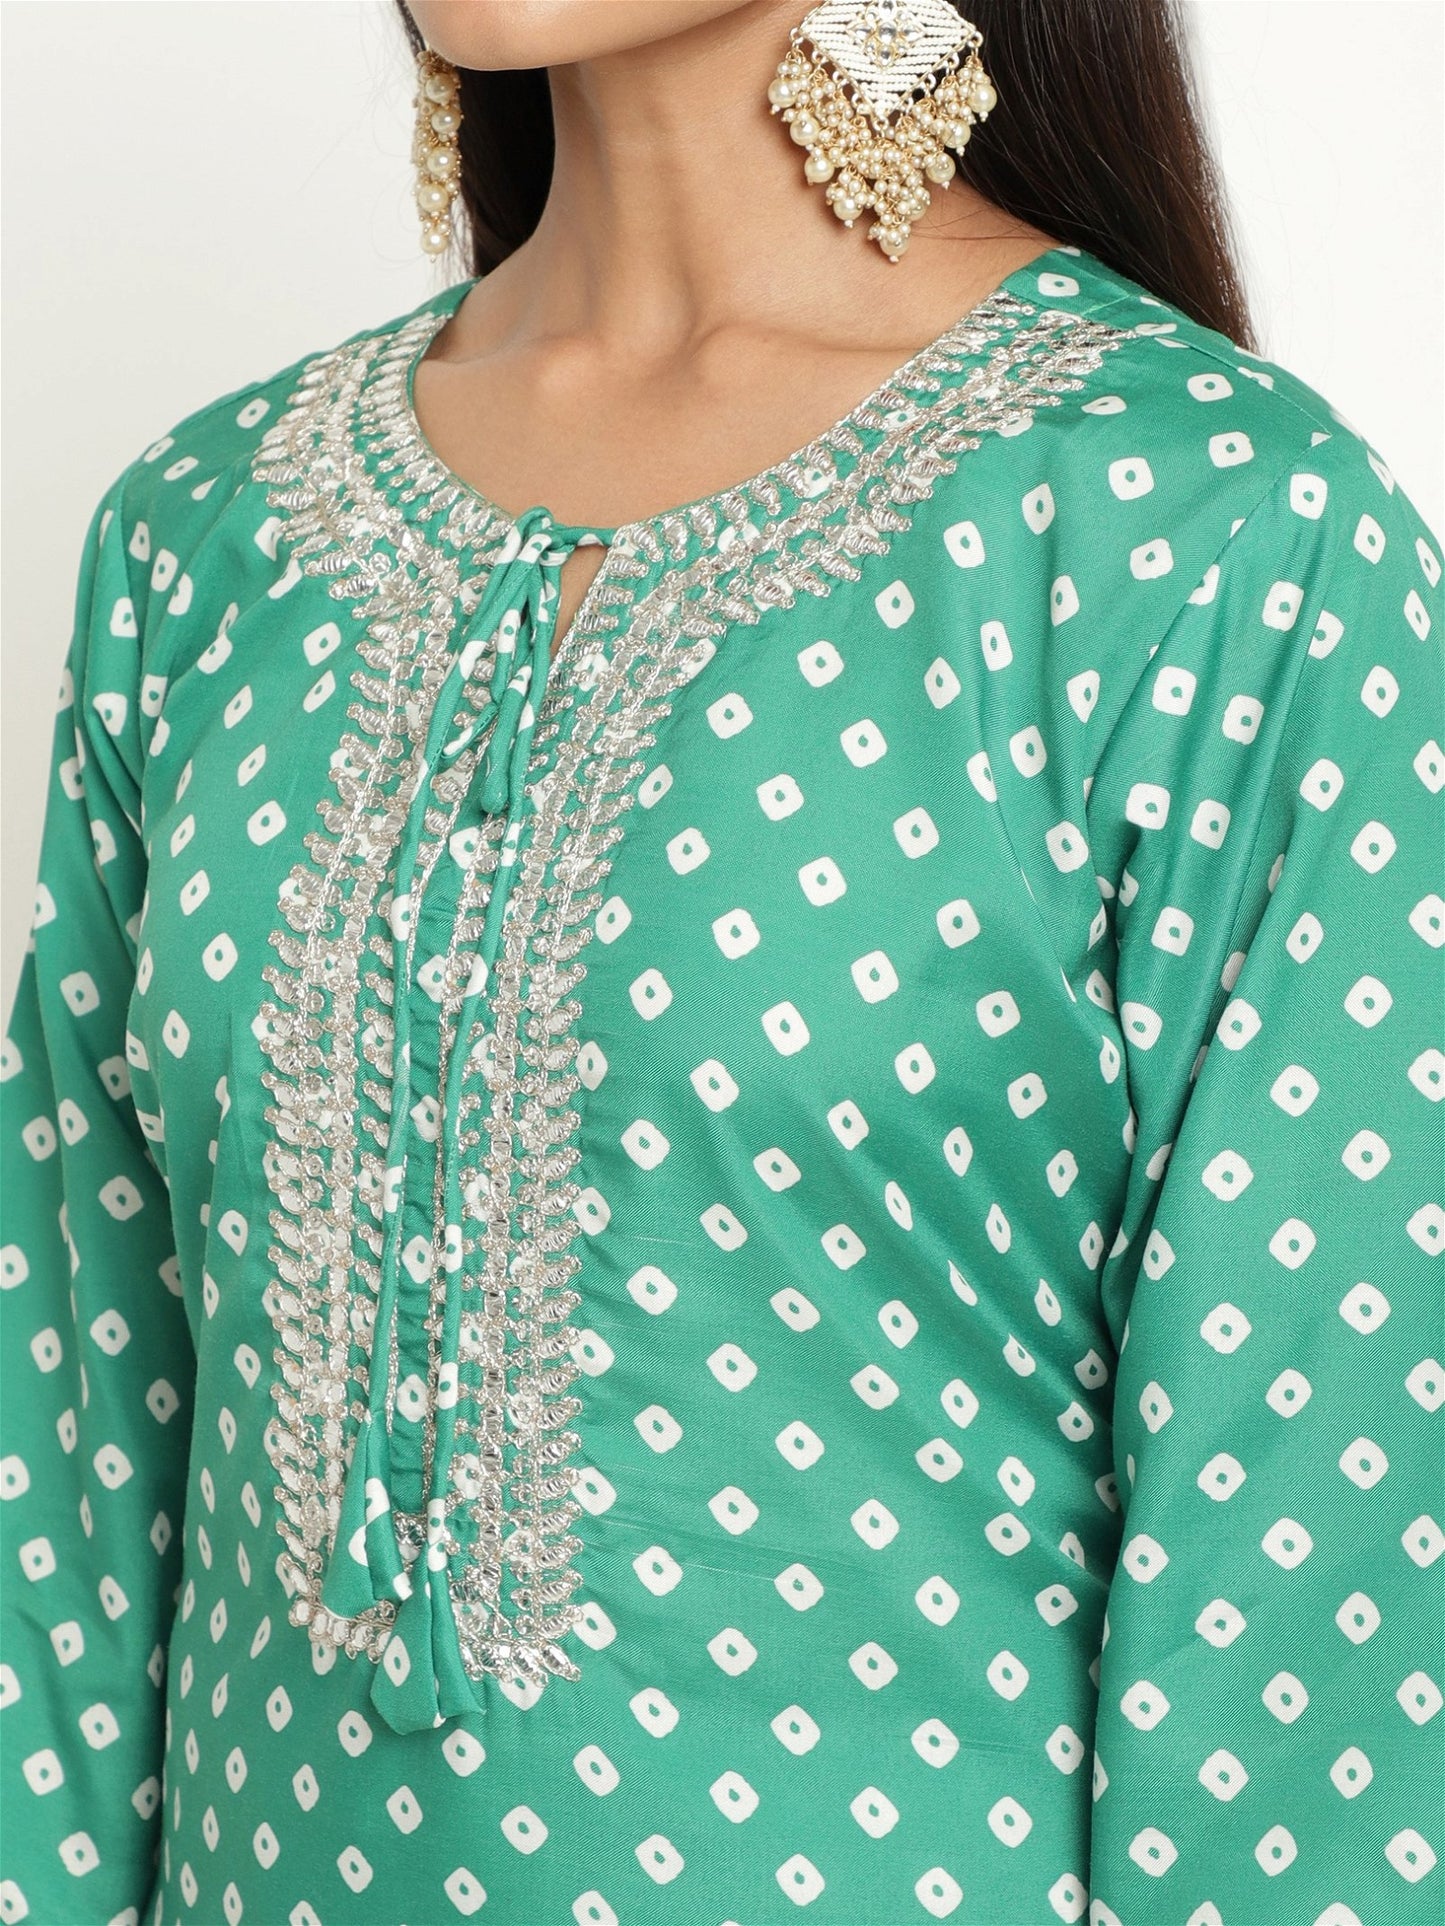 Aqua Colour Blend Silk Embroidery Work Party Wear Kurta Pant Dupatta Set For Women's